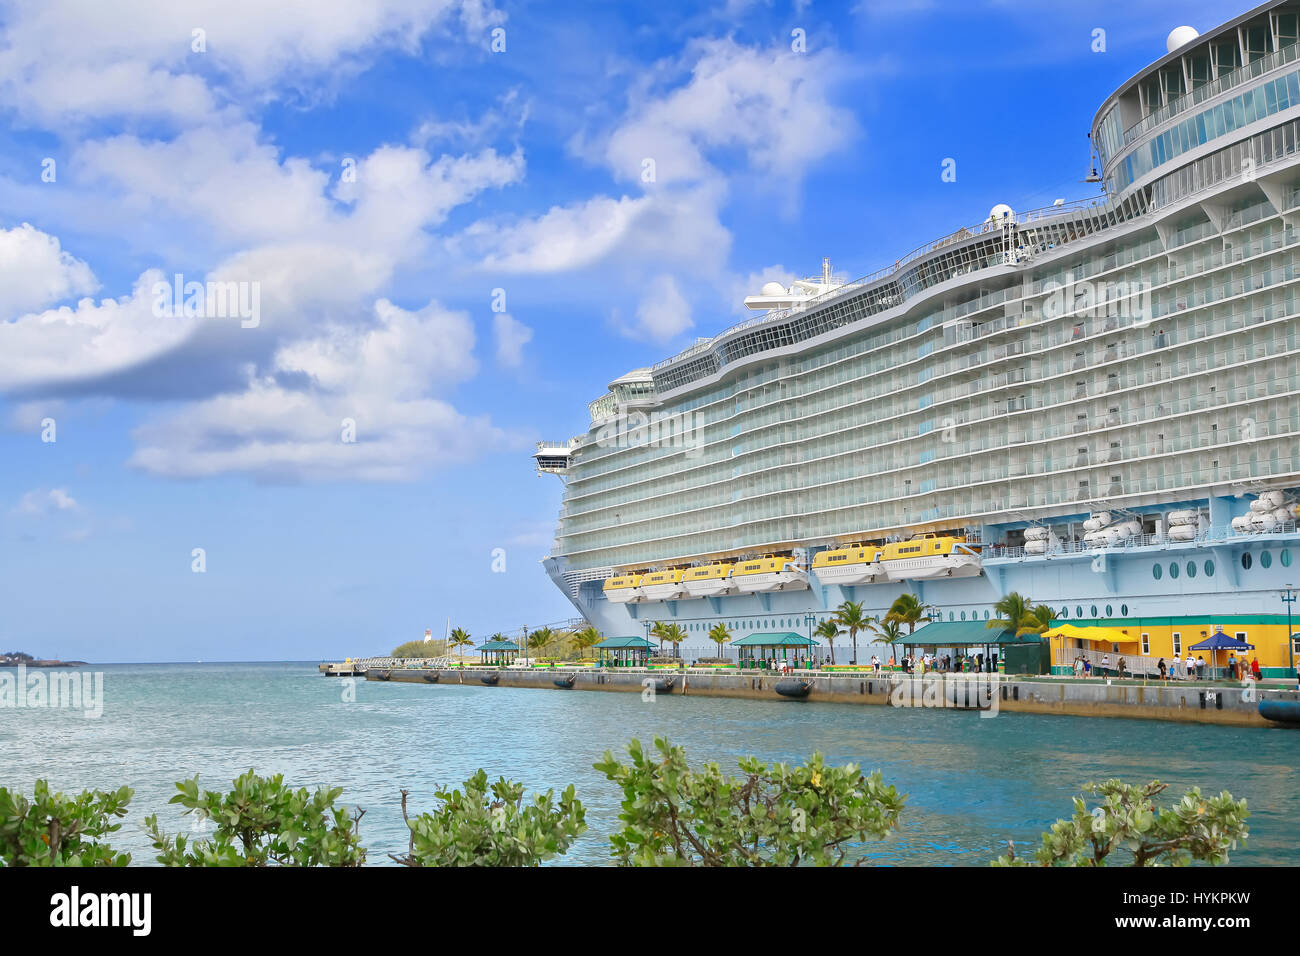 Royal Caribbean Cruise Ship Allure di mari ormeggiata al porto di Nassau, Bahamas on April 13, 2015 Foto Stock